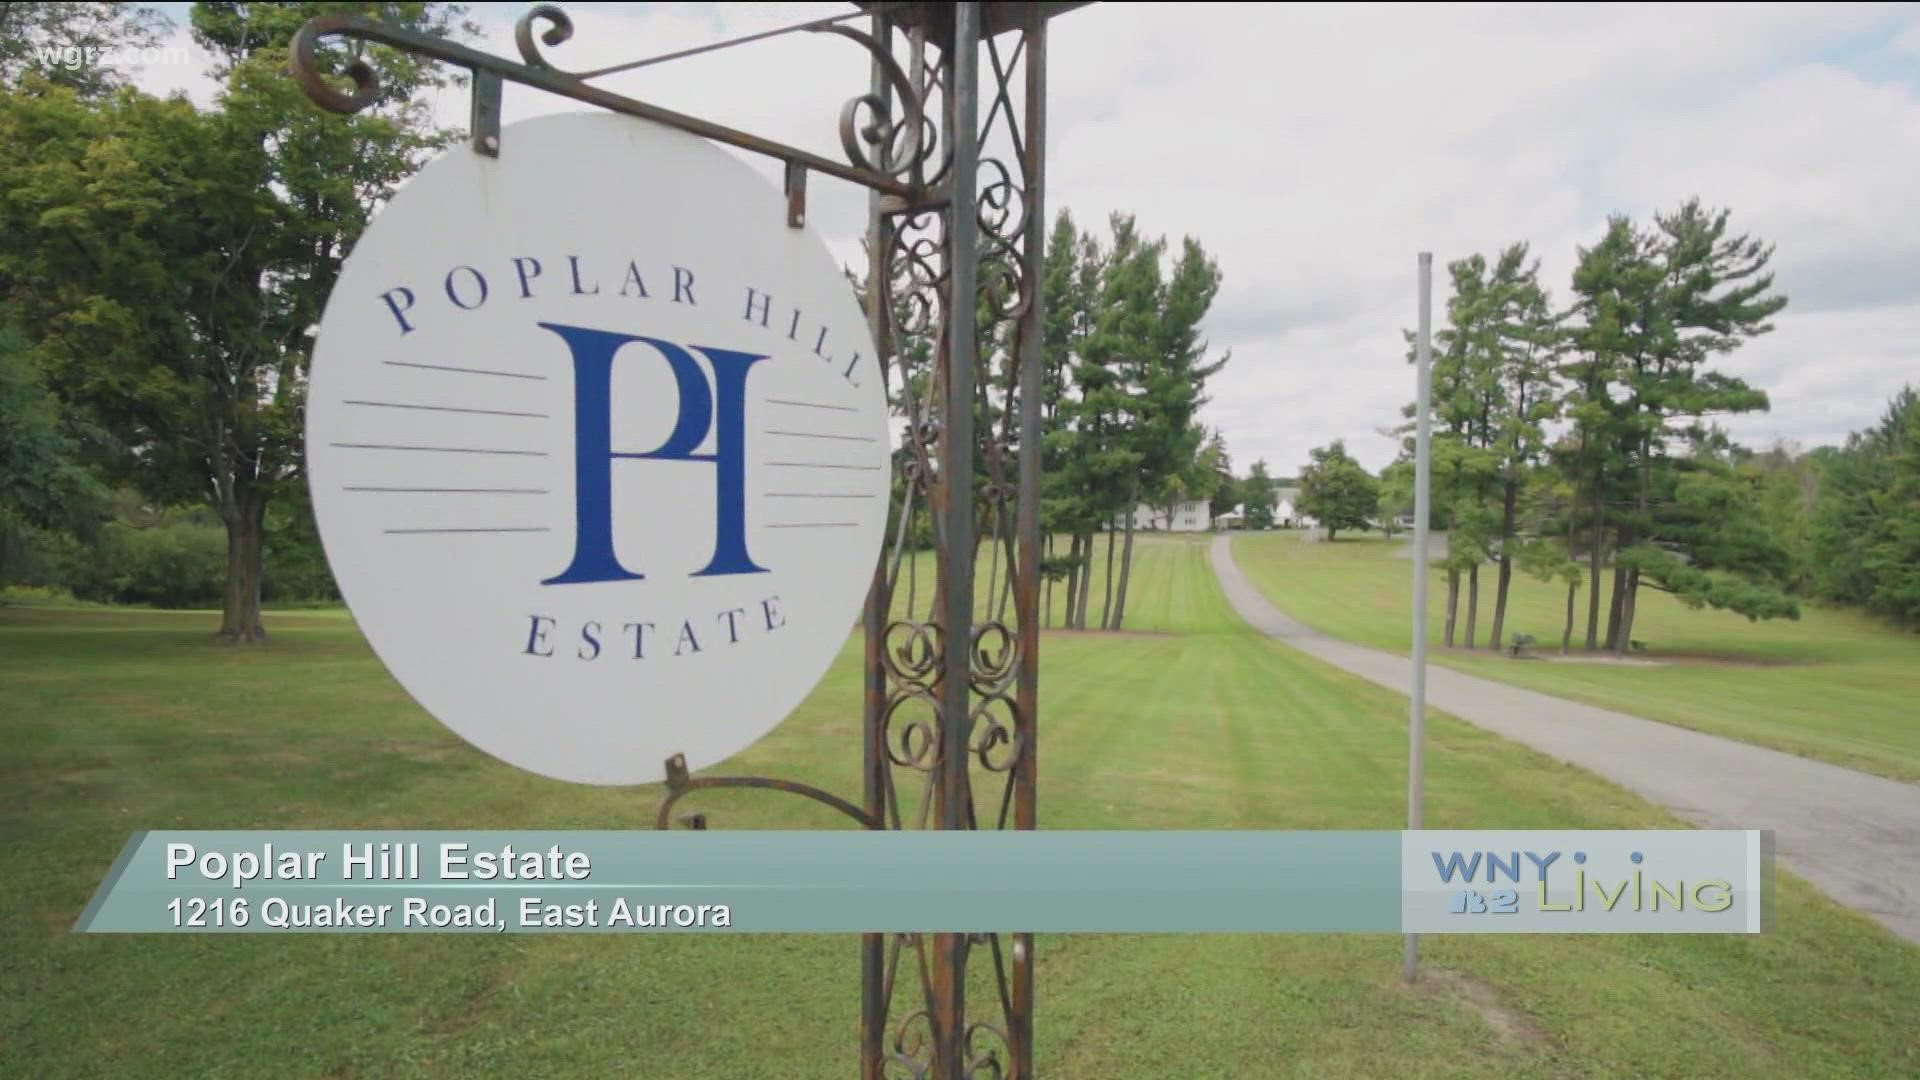 WNY Living - February 5 - Poplar Hill Estate (THIS VIDEO IS SPONSORED BY POPLAR HILL ESTATE)